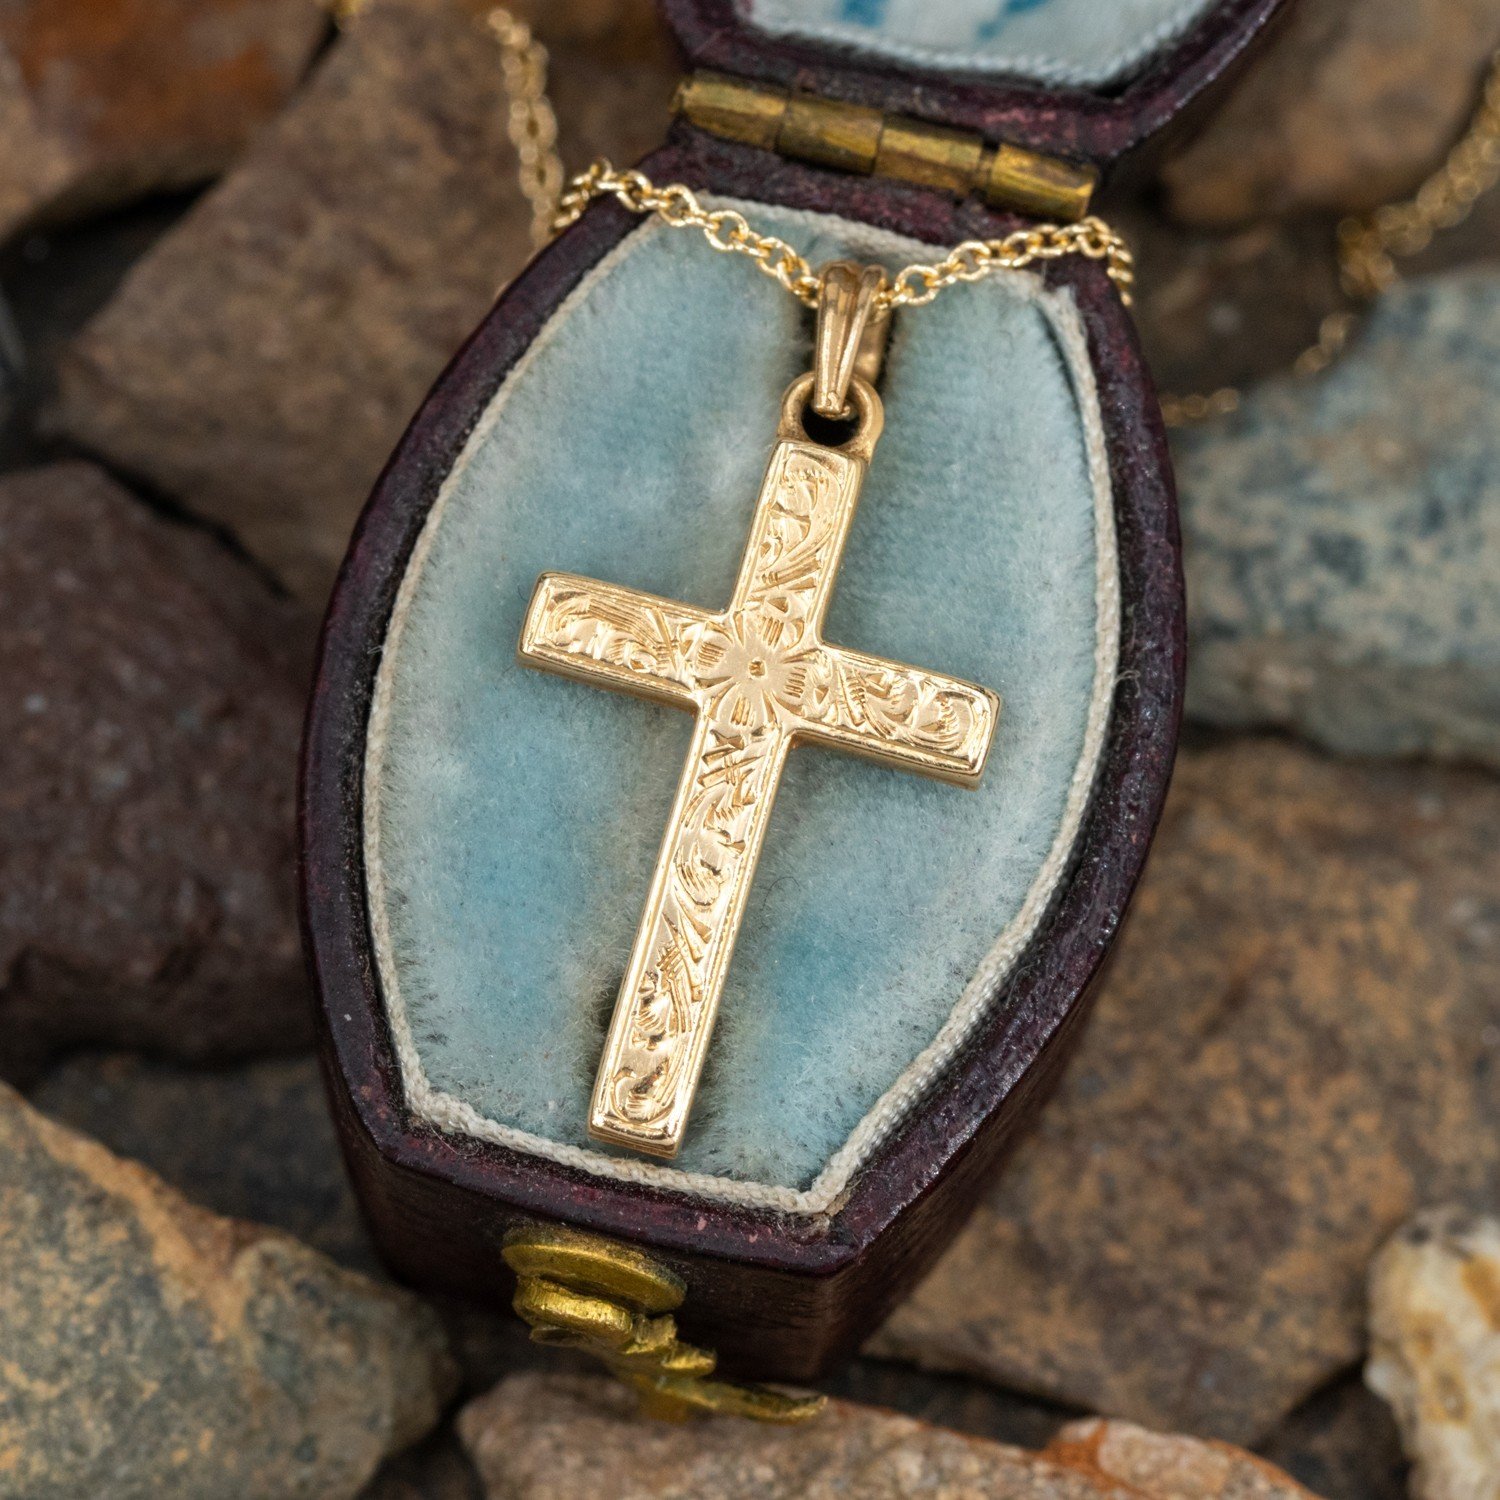 Engraved Polished Ends Cross Necklace - Gold-Filled Pendant on 18